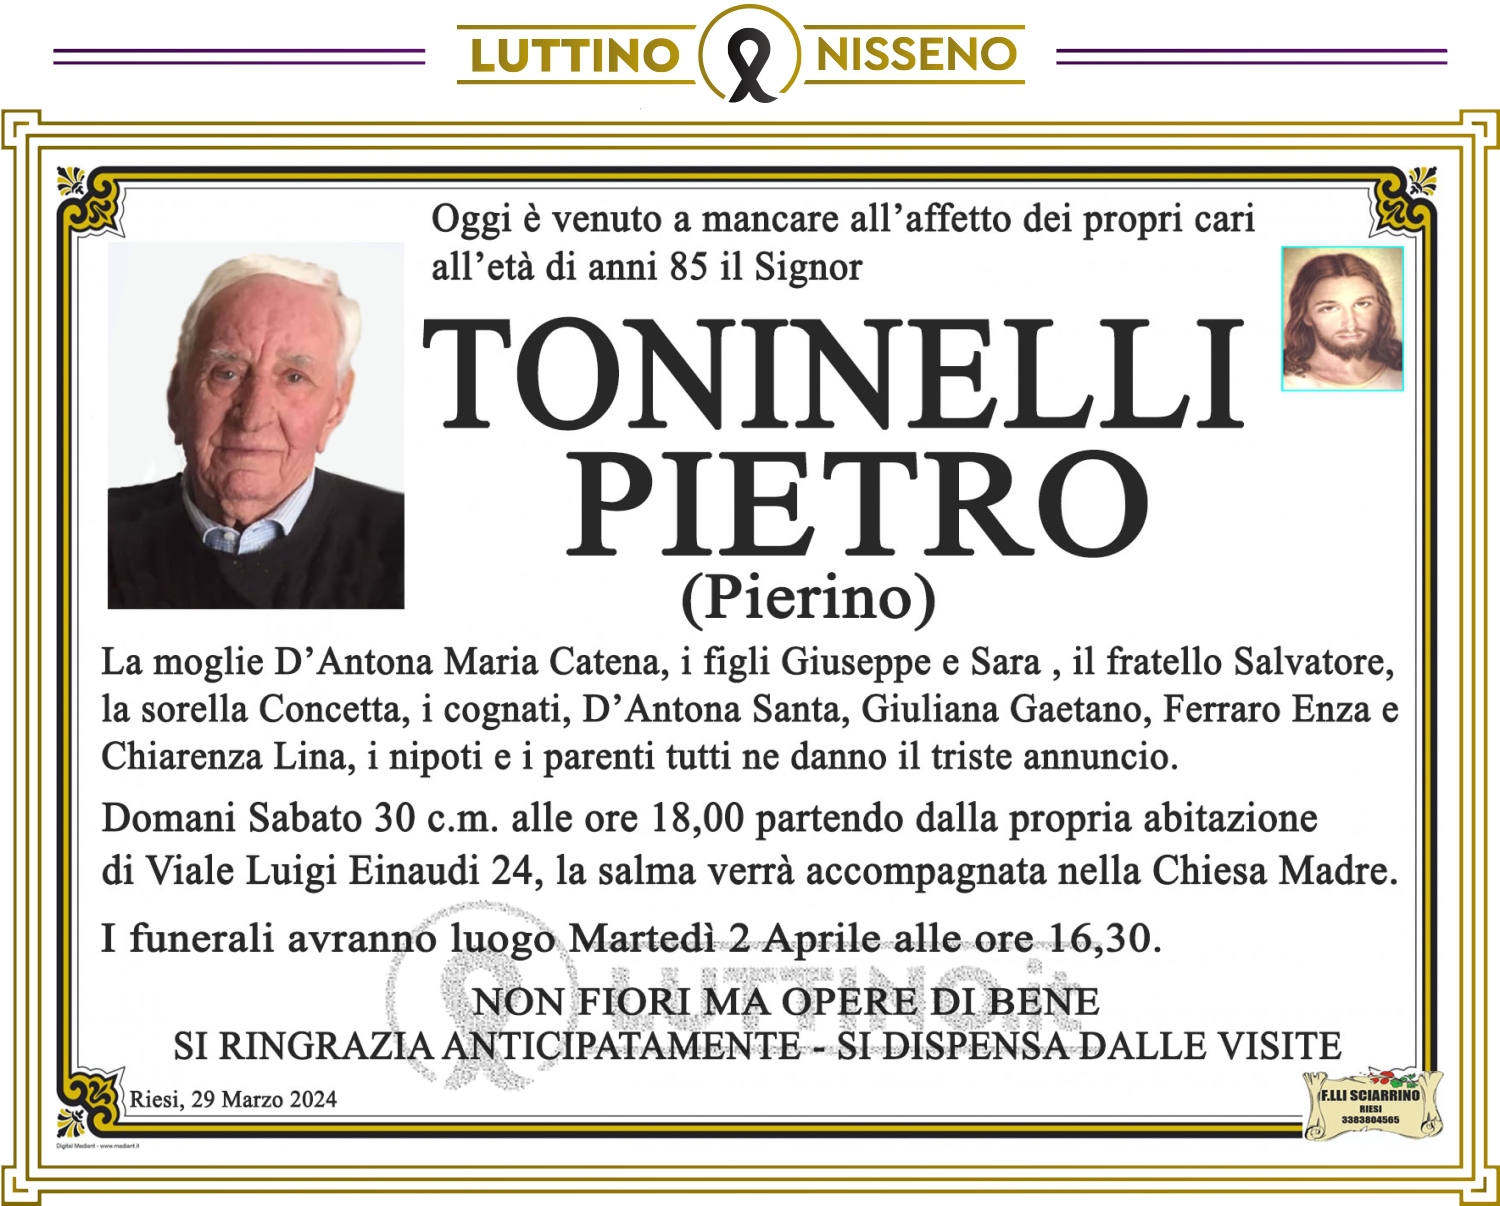 Pietro Toninelli